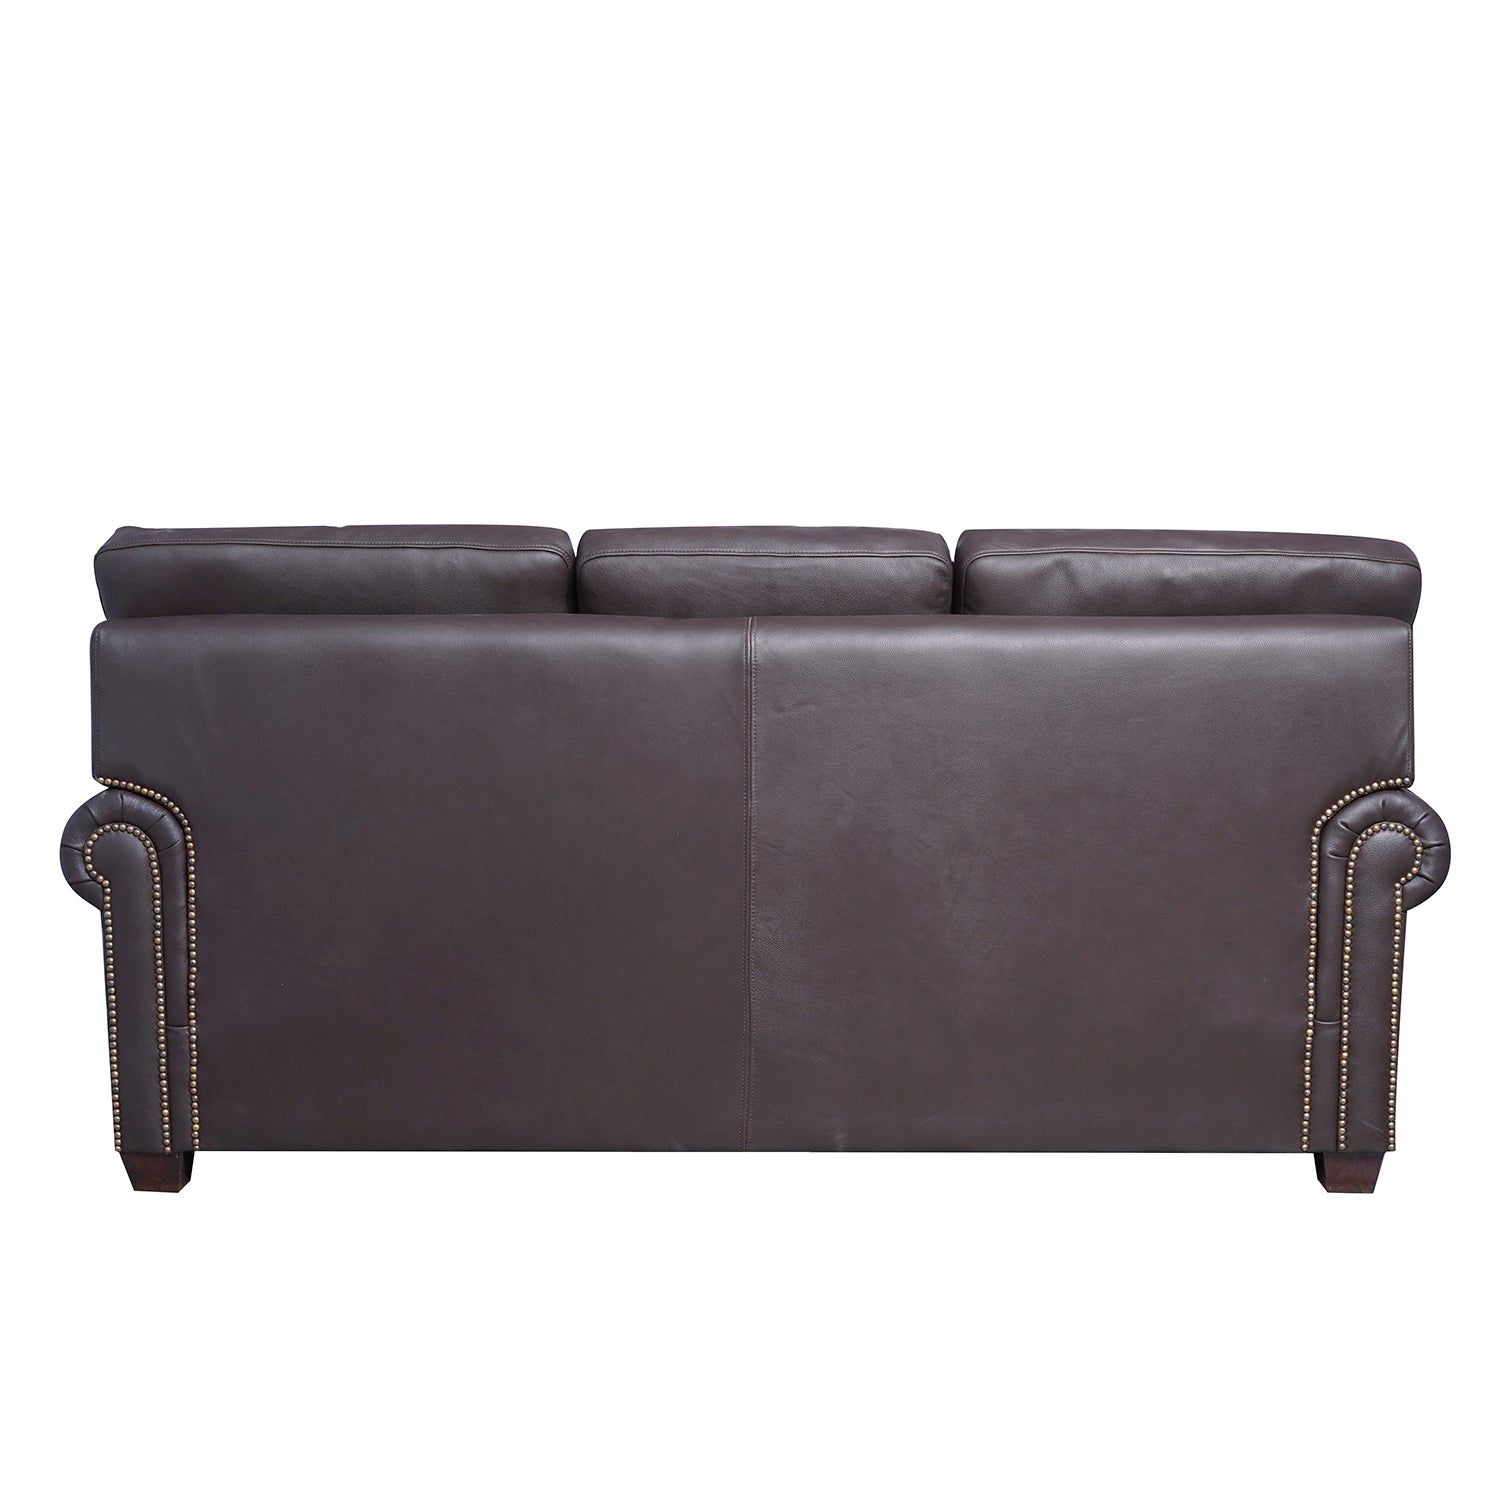 Dumond Lear Leather Sofa Umber Back